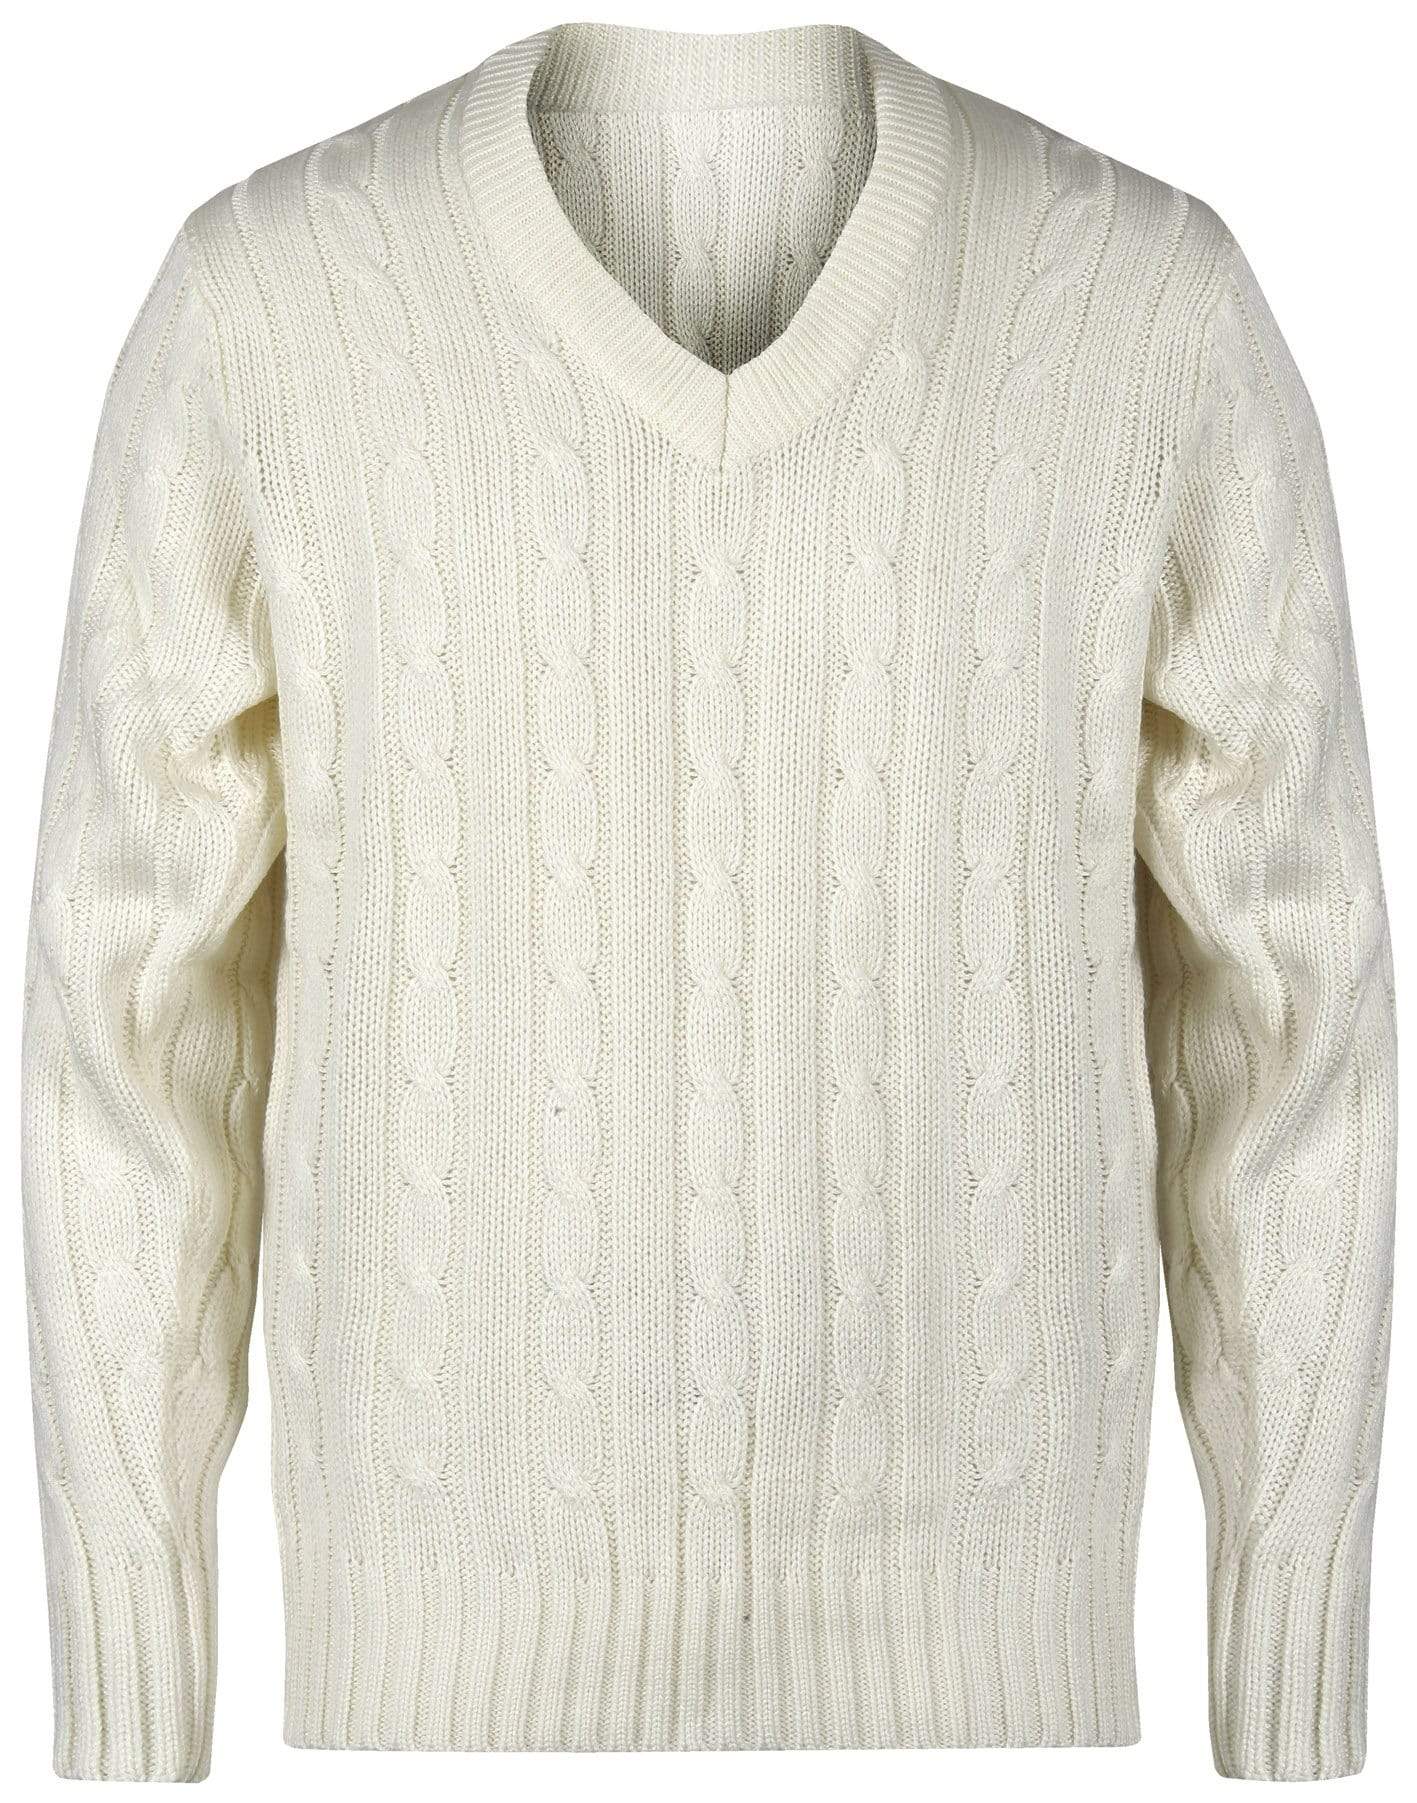 Gray Nicolls Clothing Gray-Nicolls Long Sleeve Plain Cricket Adult Sweater